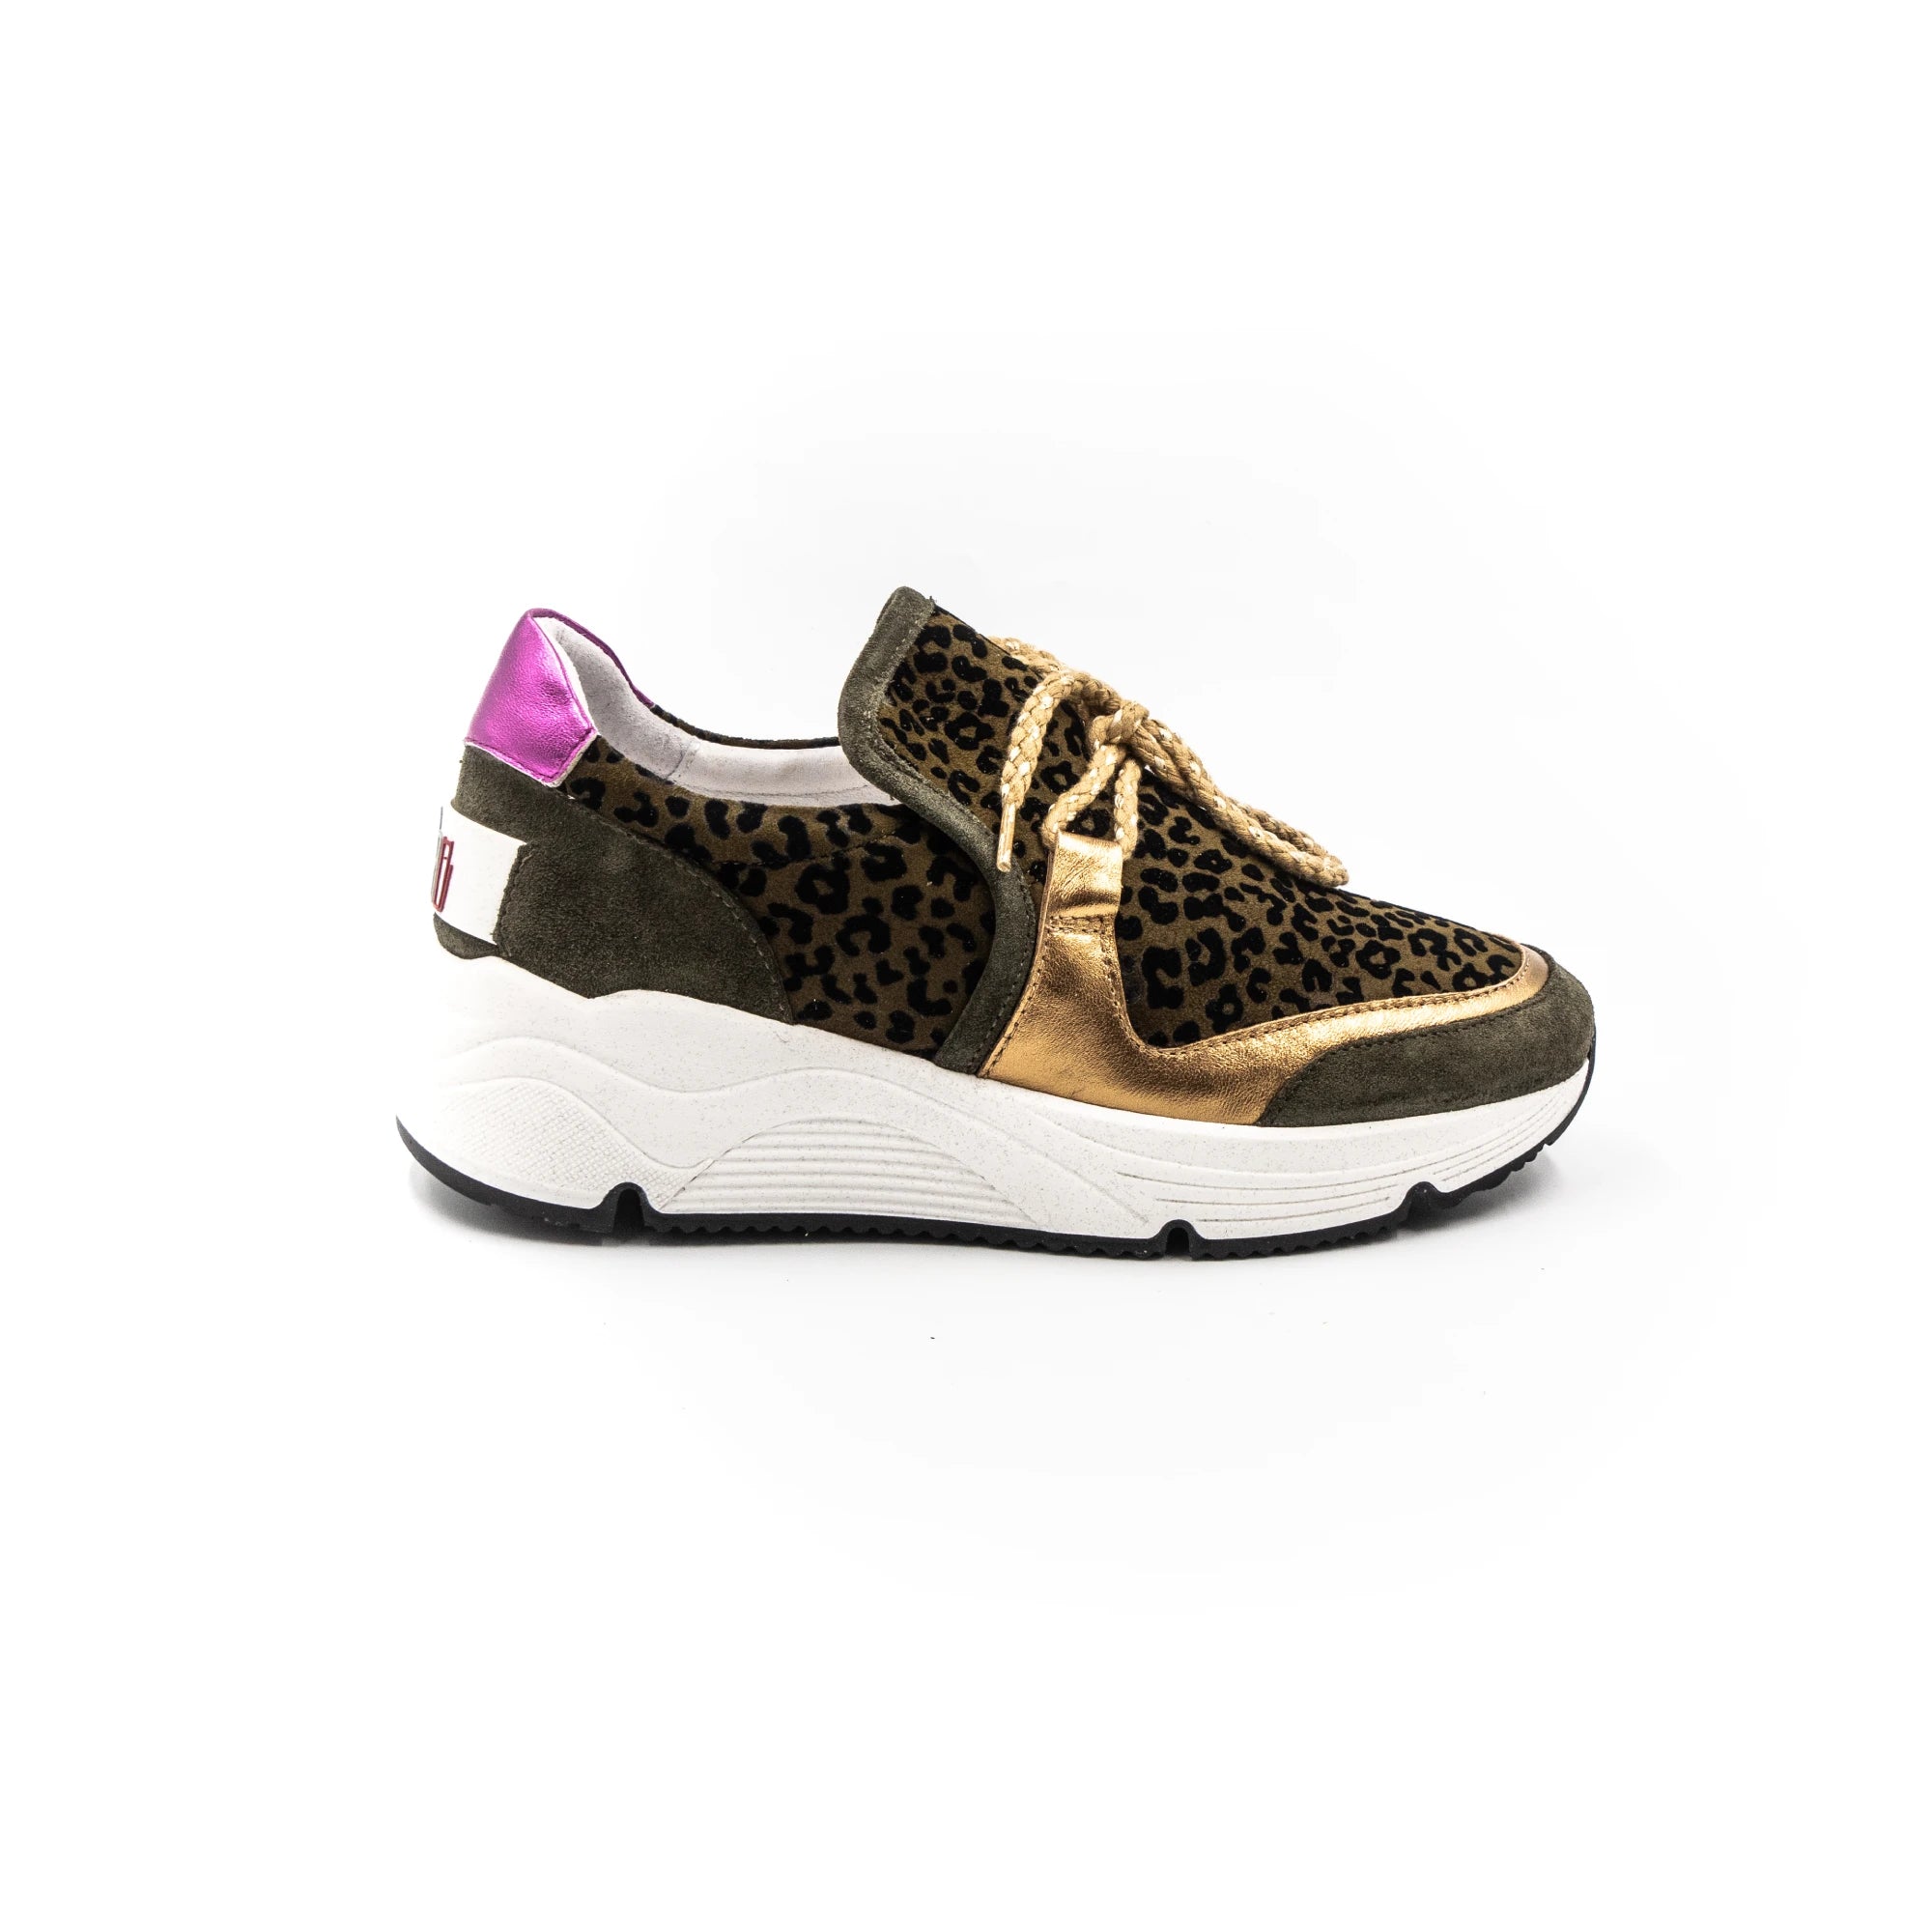 Leopard print sneakers.